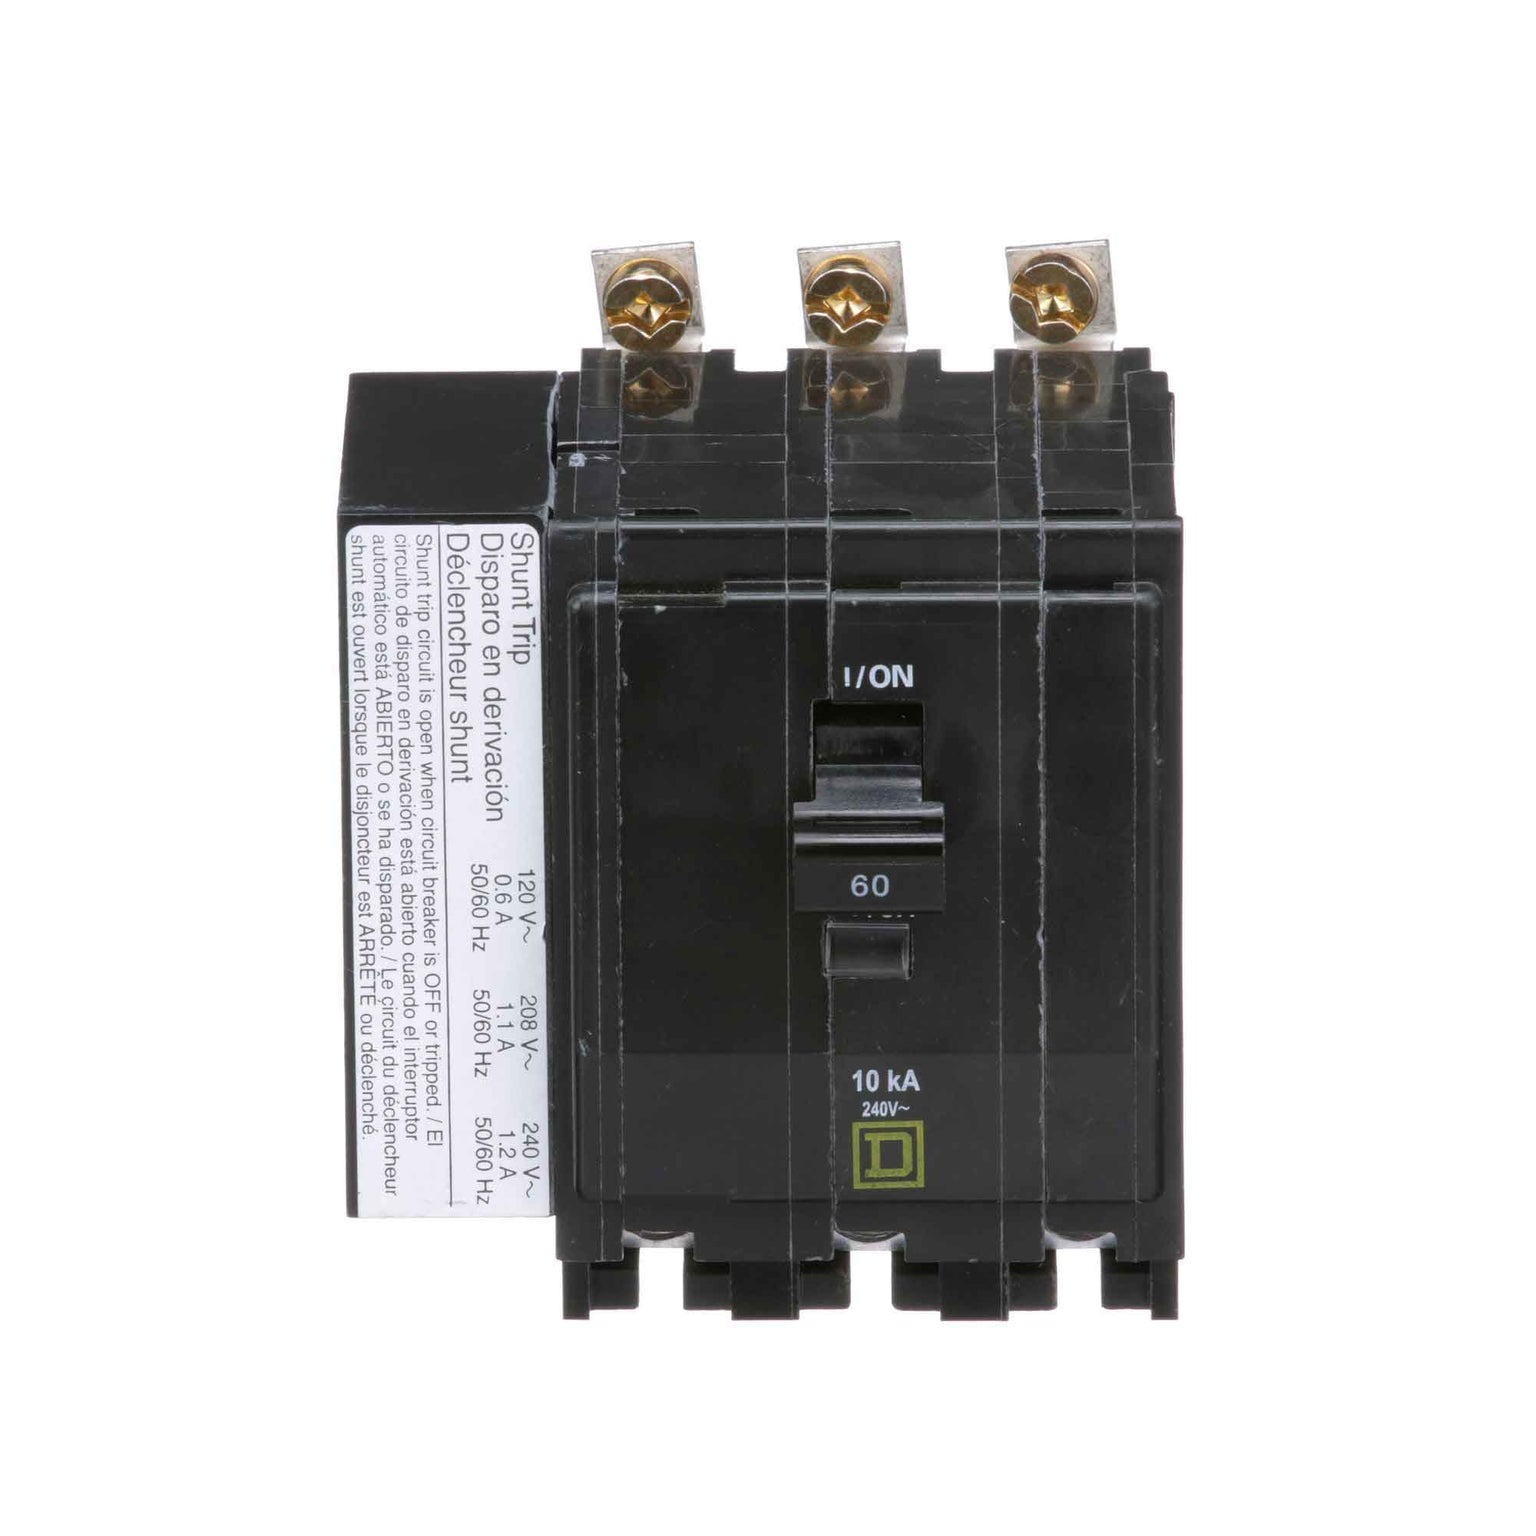 QOB3601021 - Square D - Molded Case Circuit Breakers